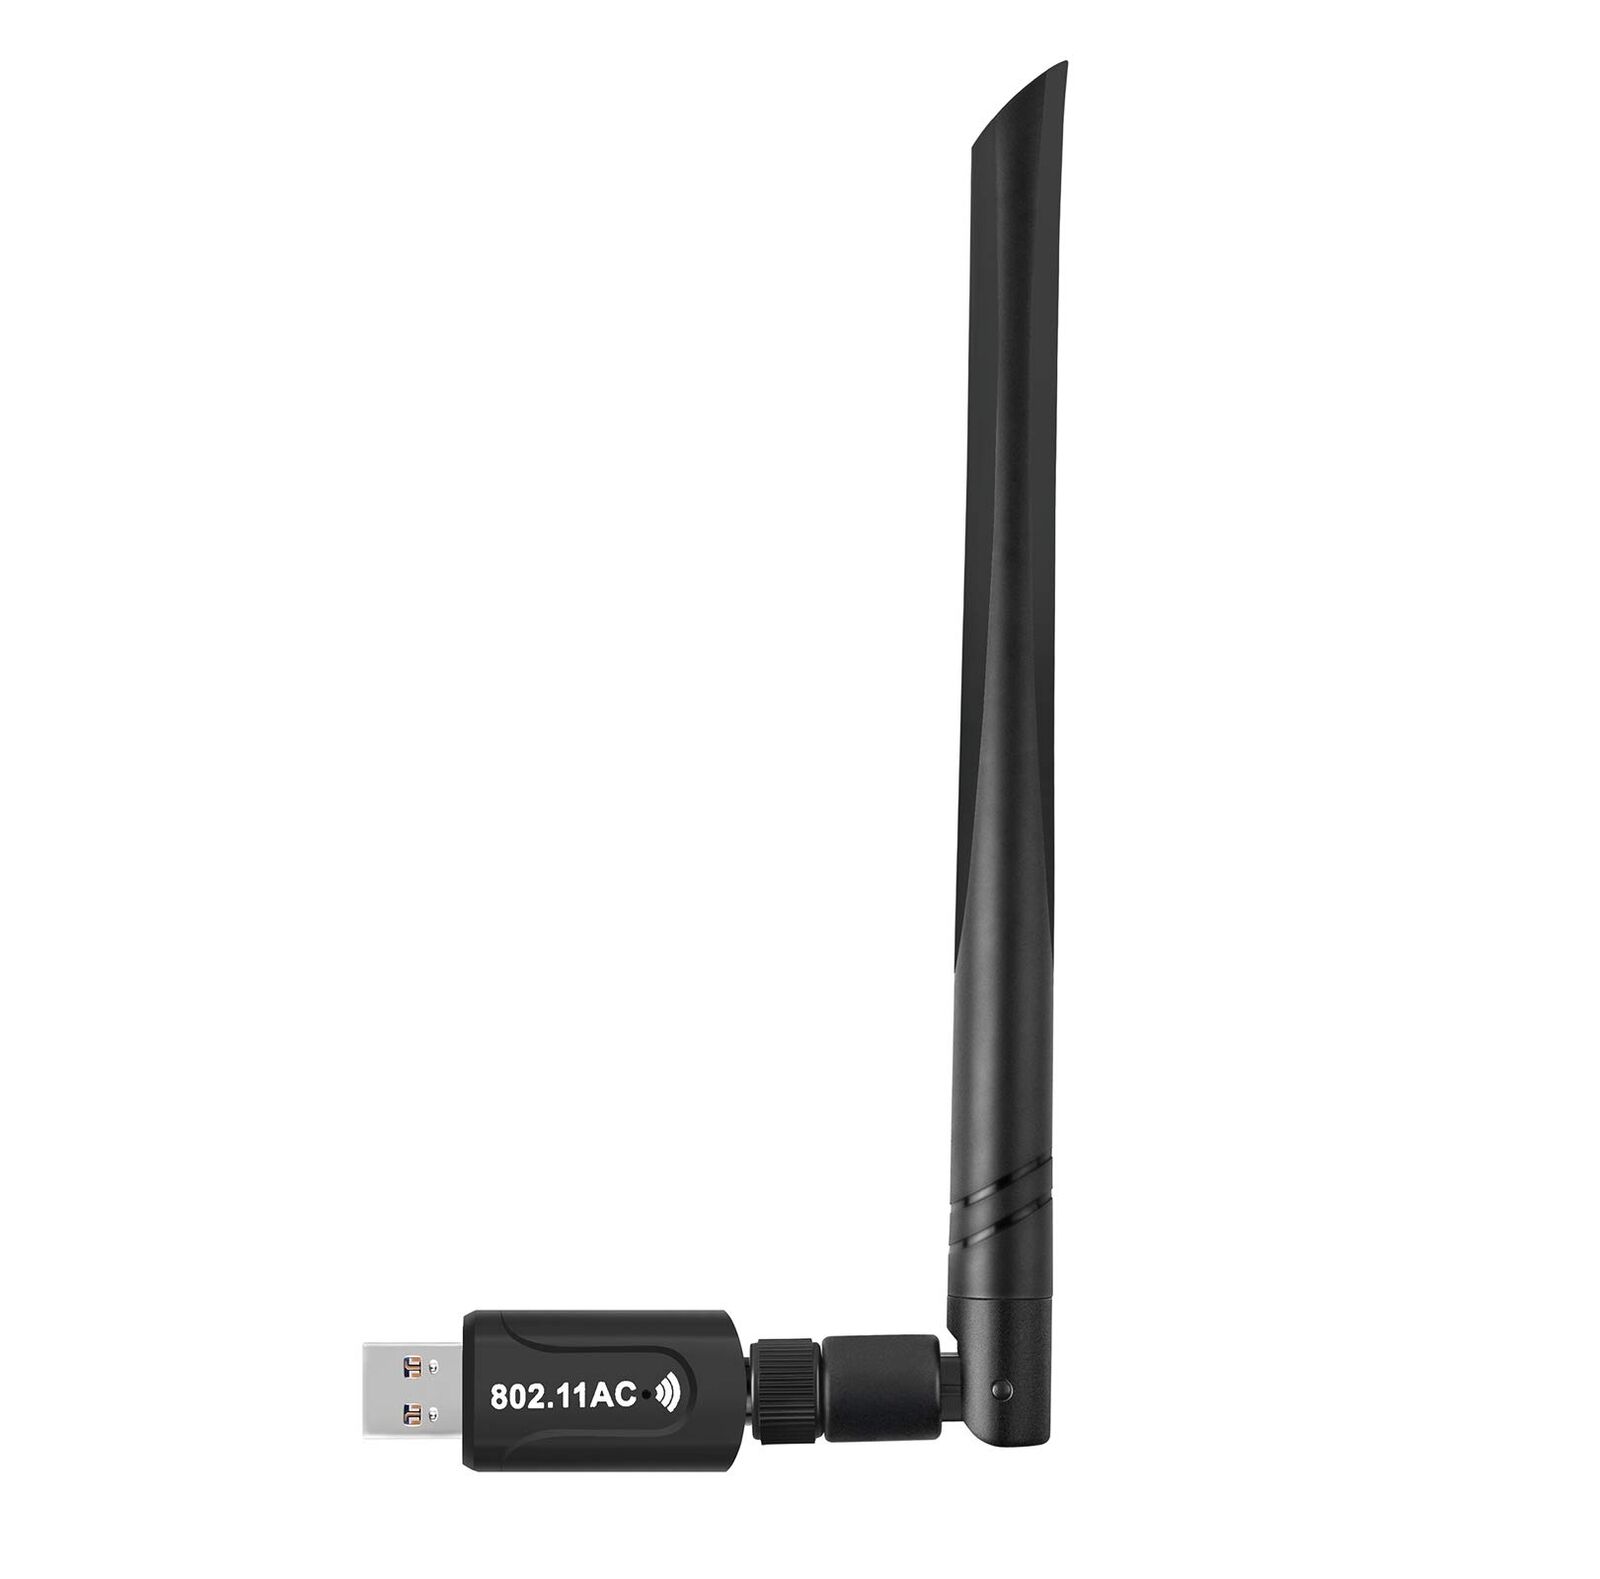 Realtek RTL8812BU USB Wireless Adapter 1300 Mbps with 5 dBi Antenna Dual Band...